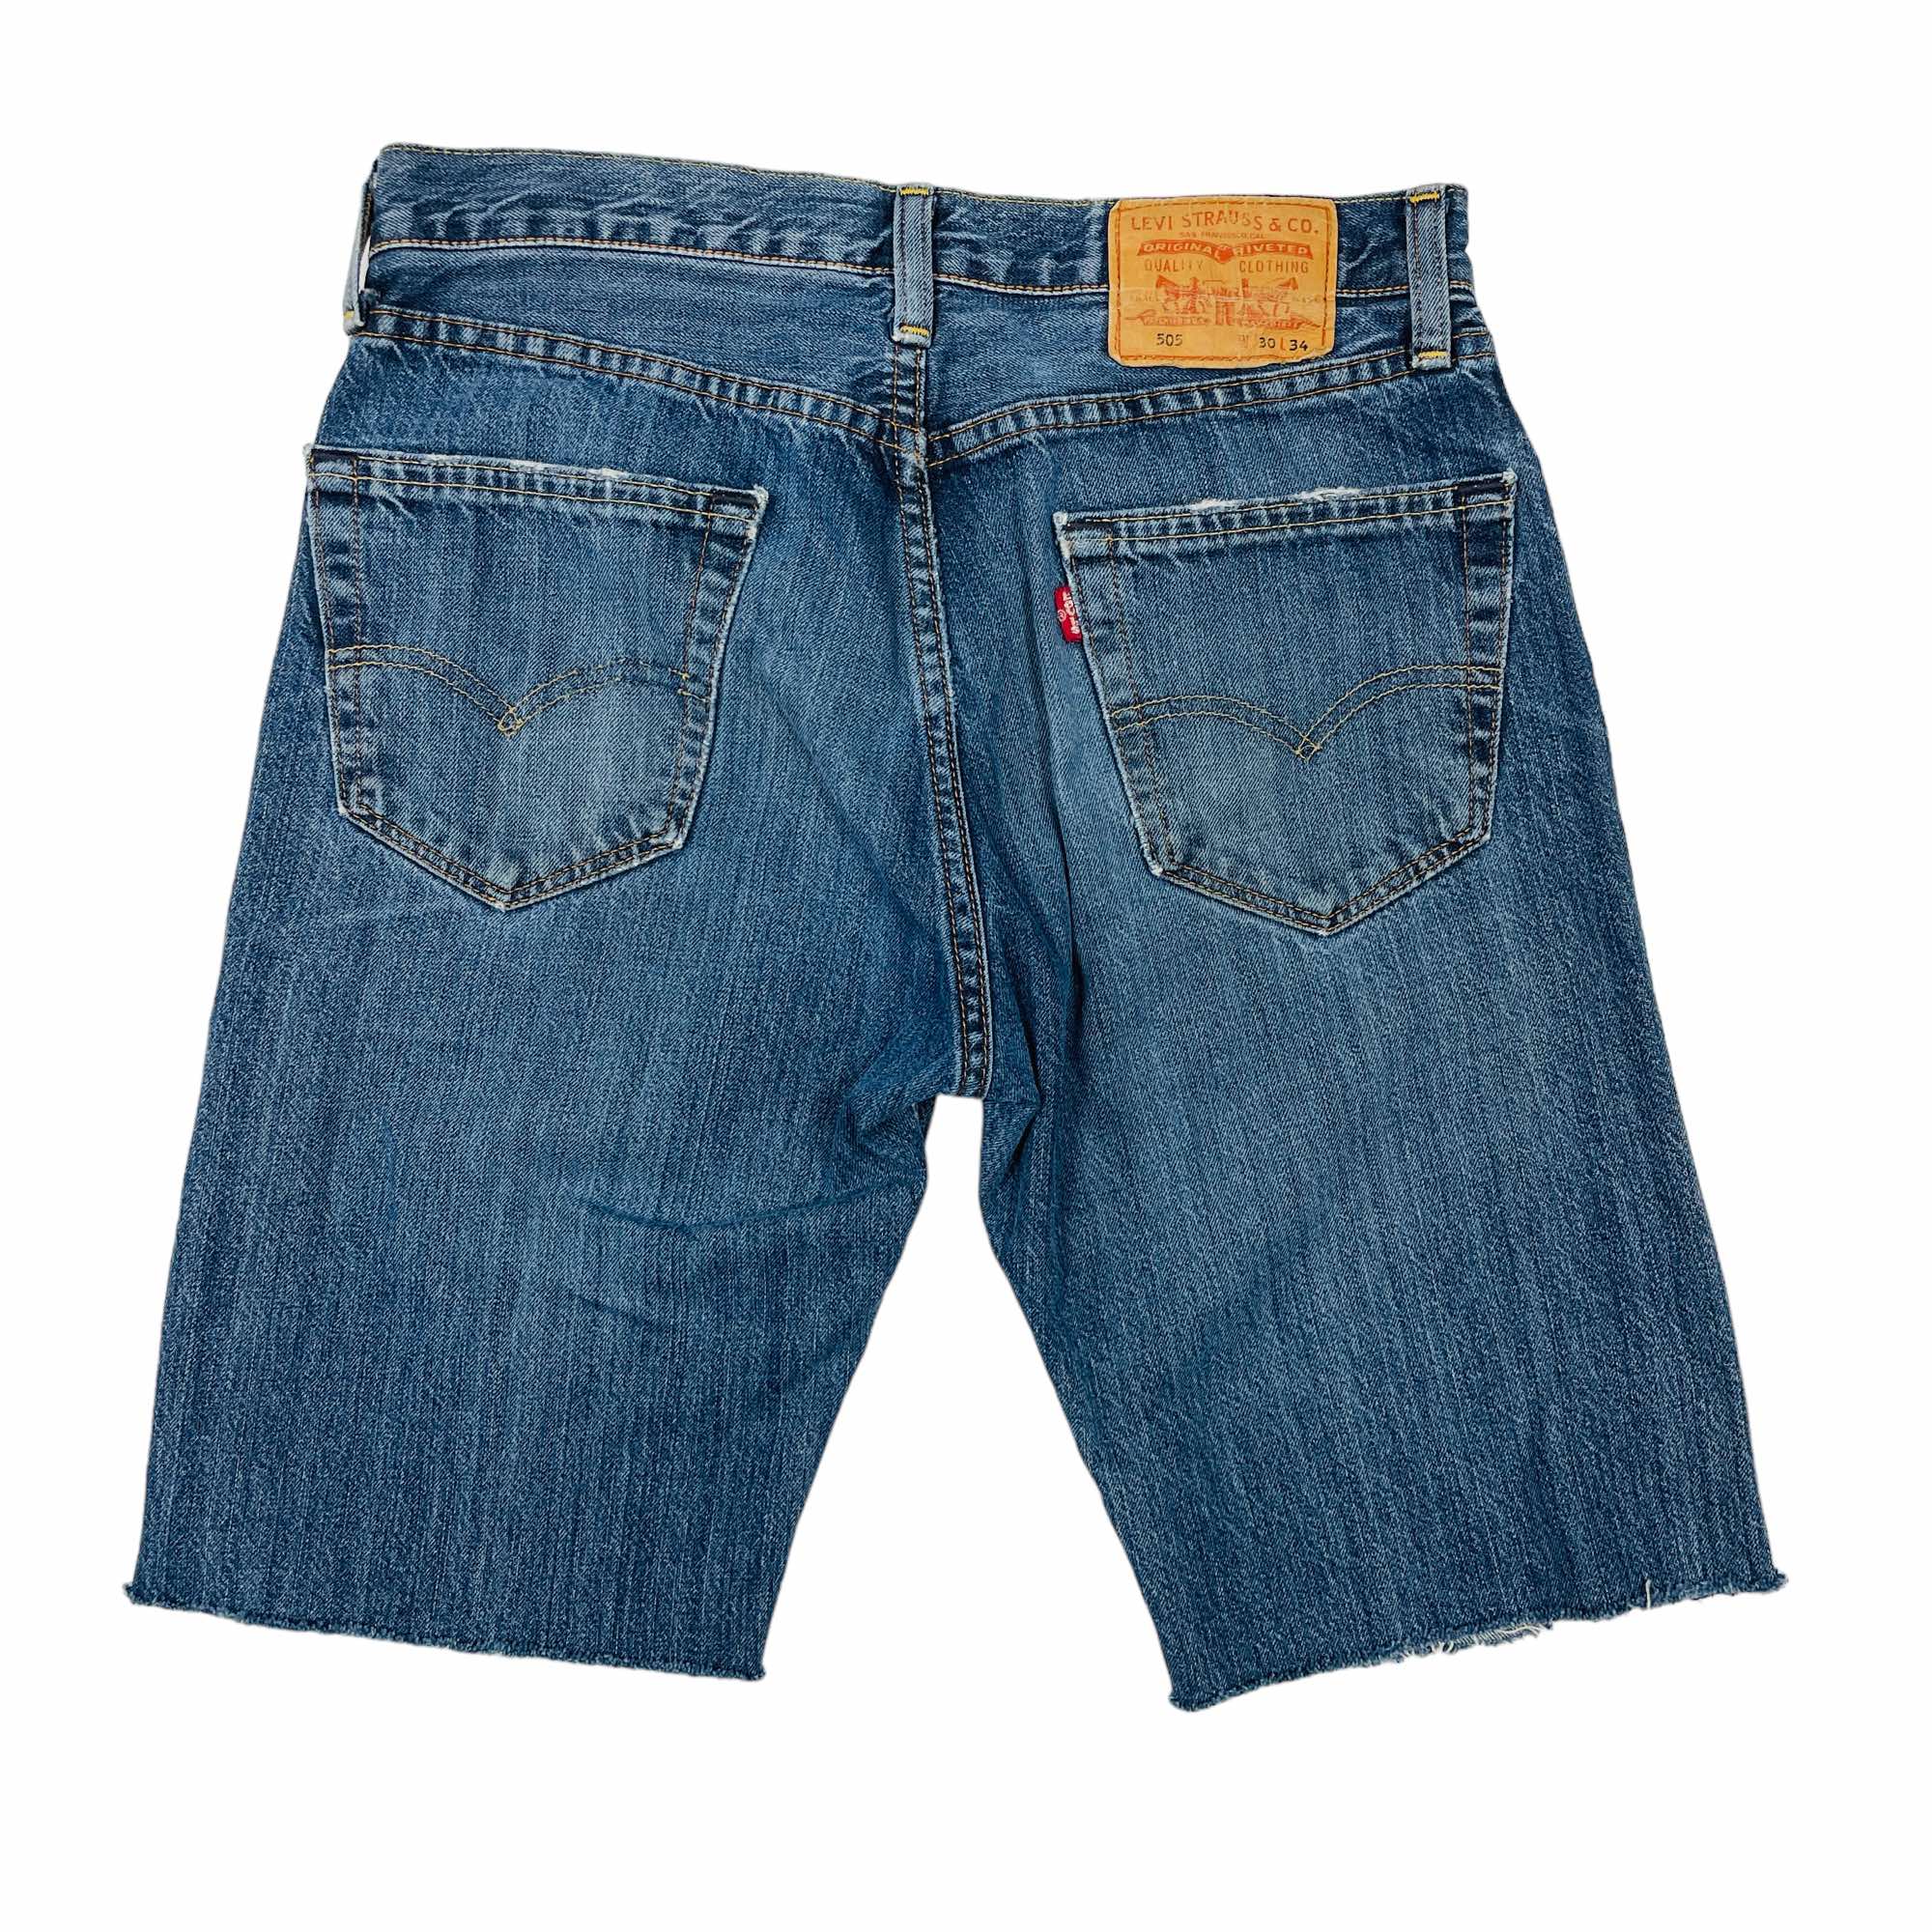 Levi's 505 Denim Shorts - W30